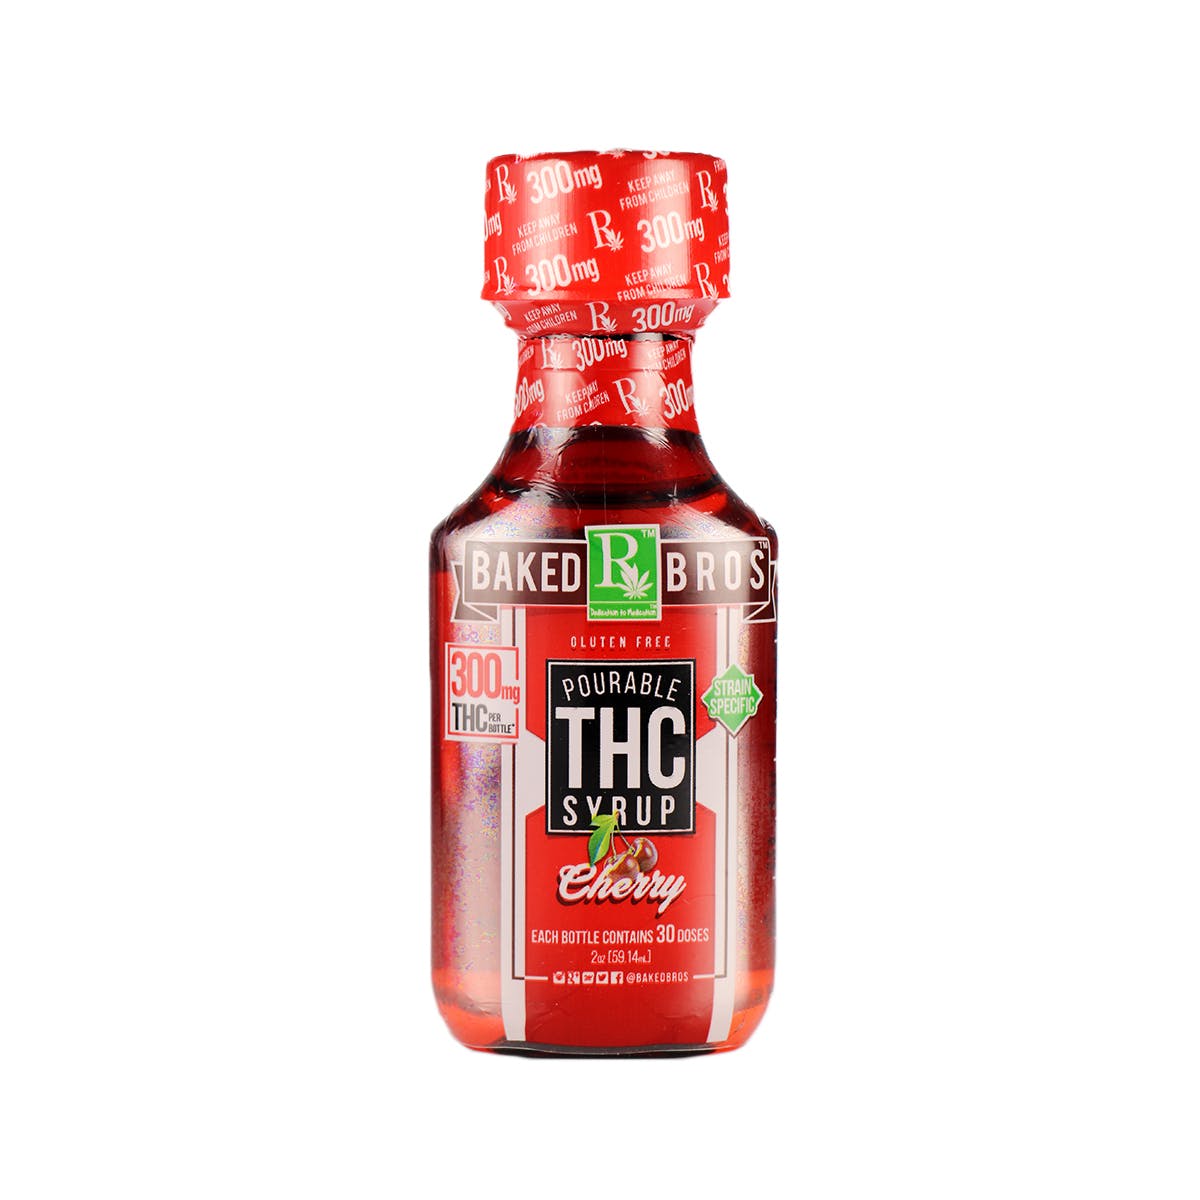 THC Syrup Cherry 300mg